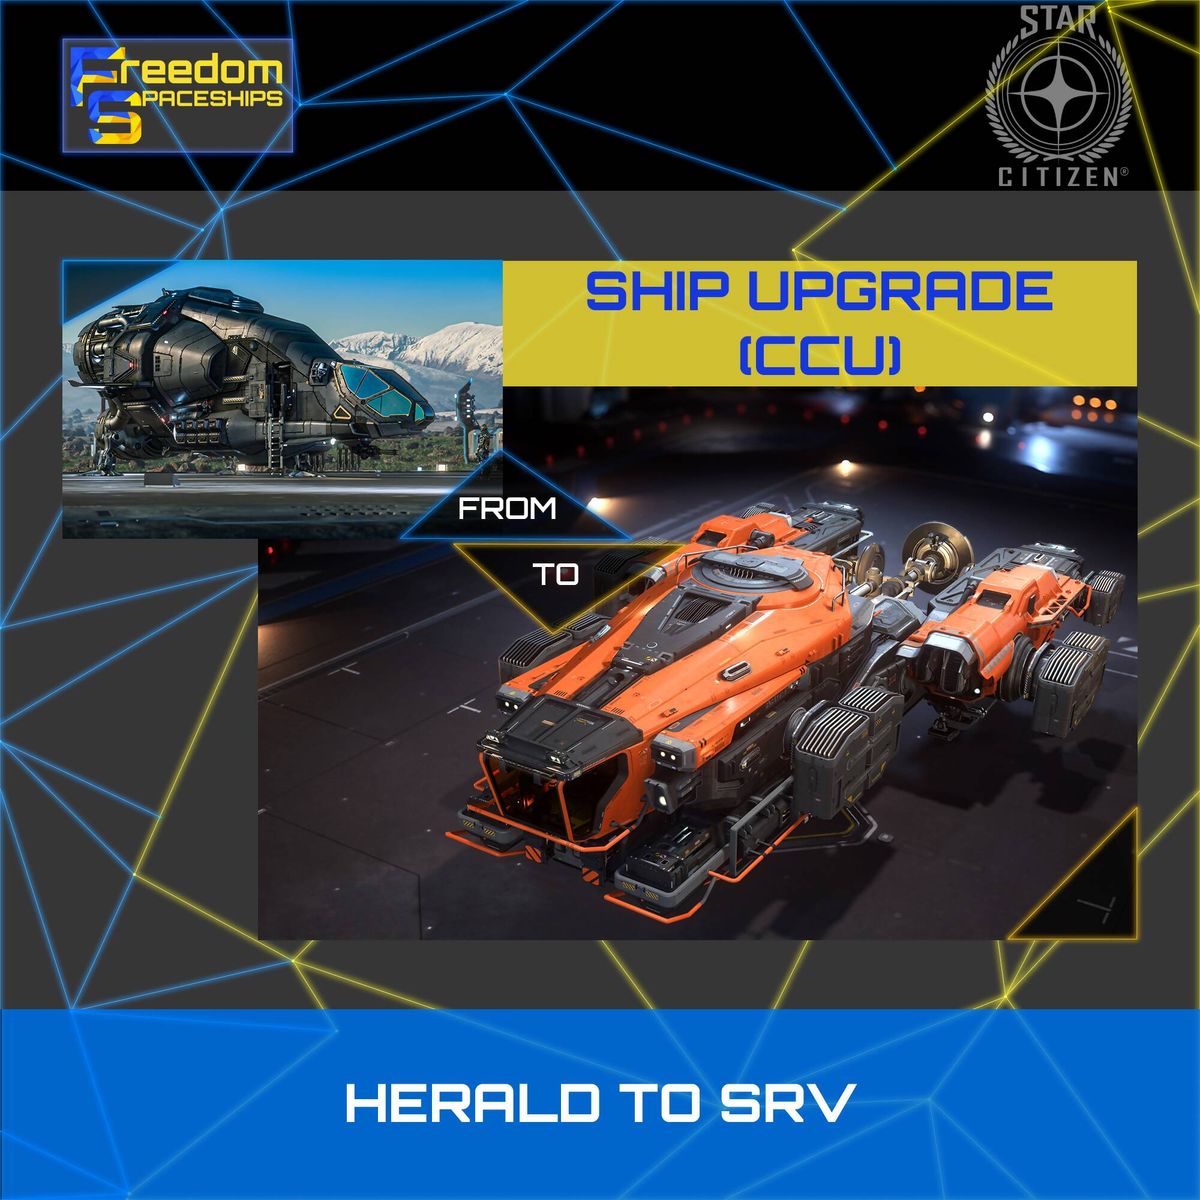 Upgrade - Herald to SRV